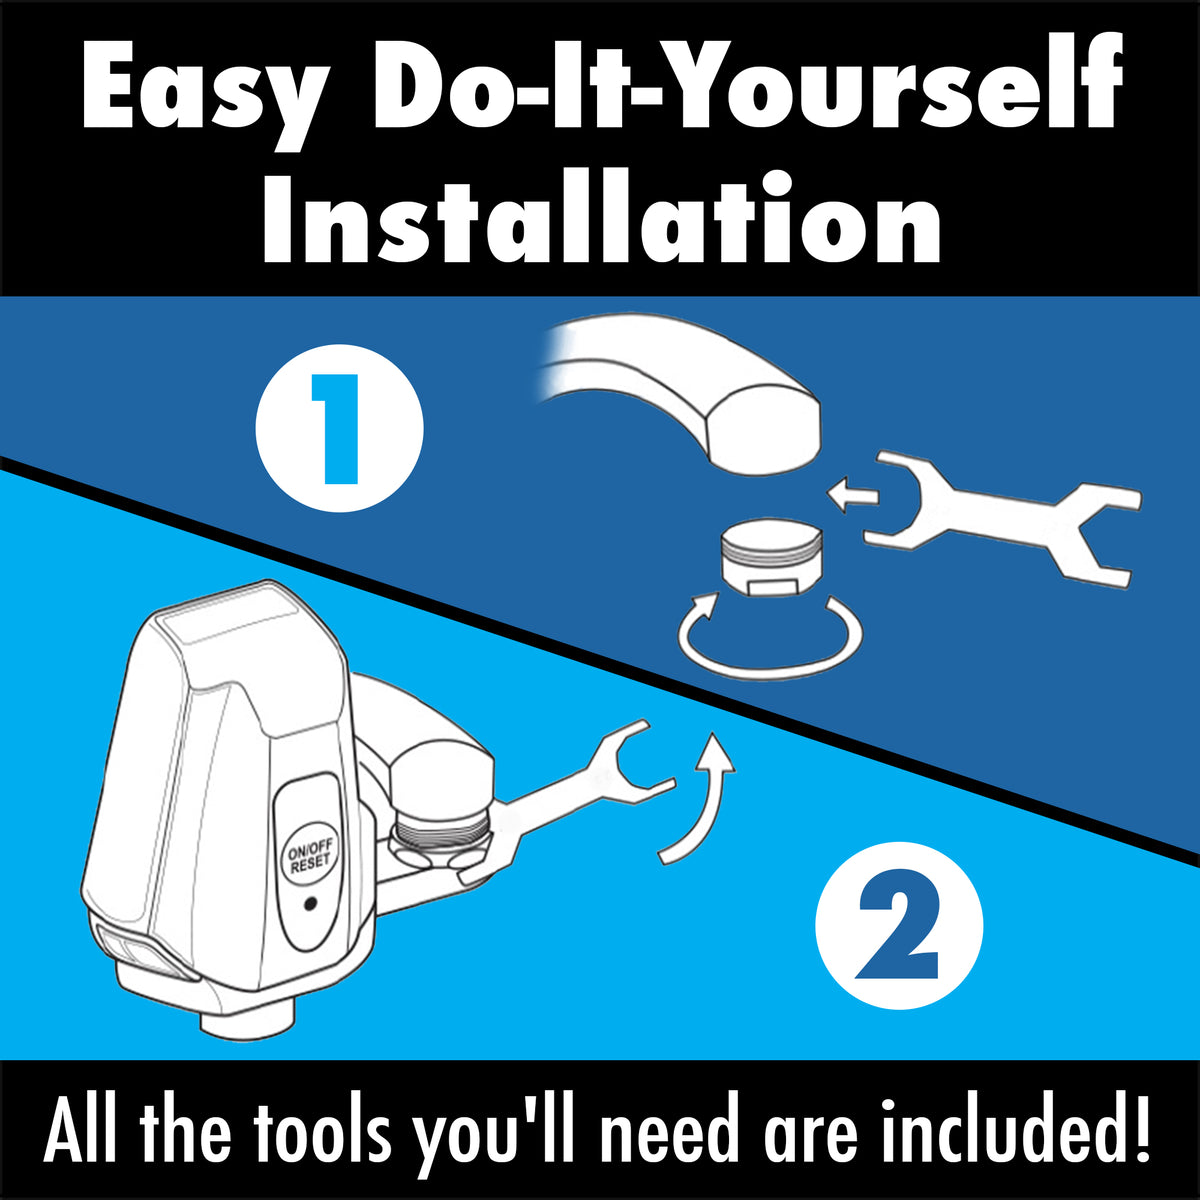 EZF003C easy do-it-yourself installation